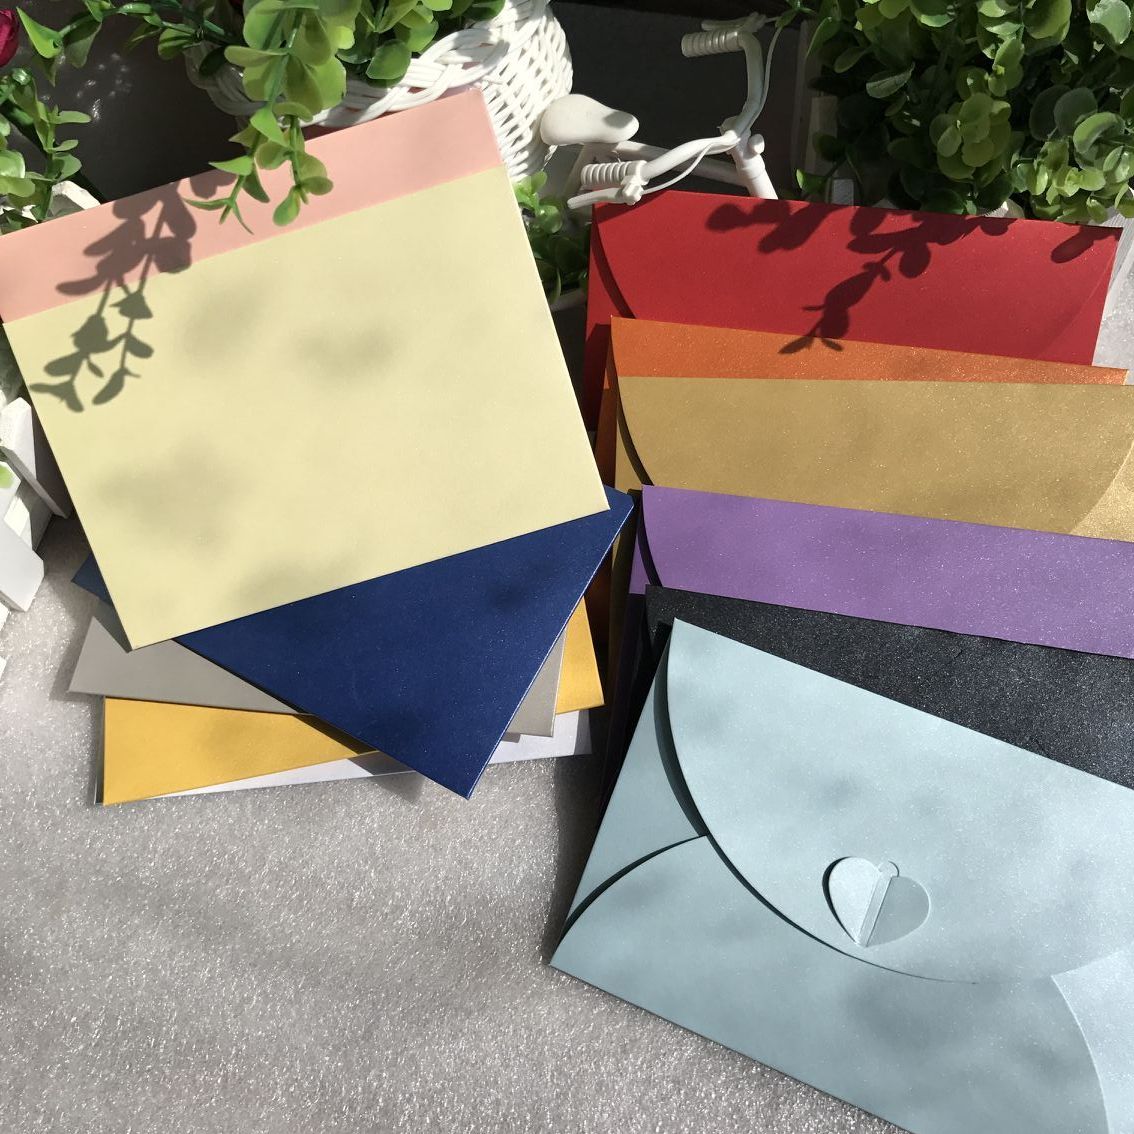 M&G 50pcs/set envelopes for invitations weeding envelope 17.5*11cm(1inch=2.54cm) paper envelopes wedding invitation envelope